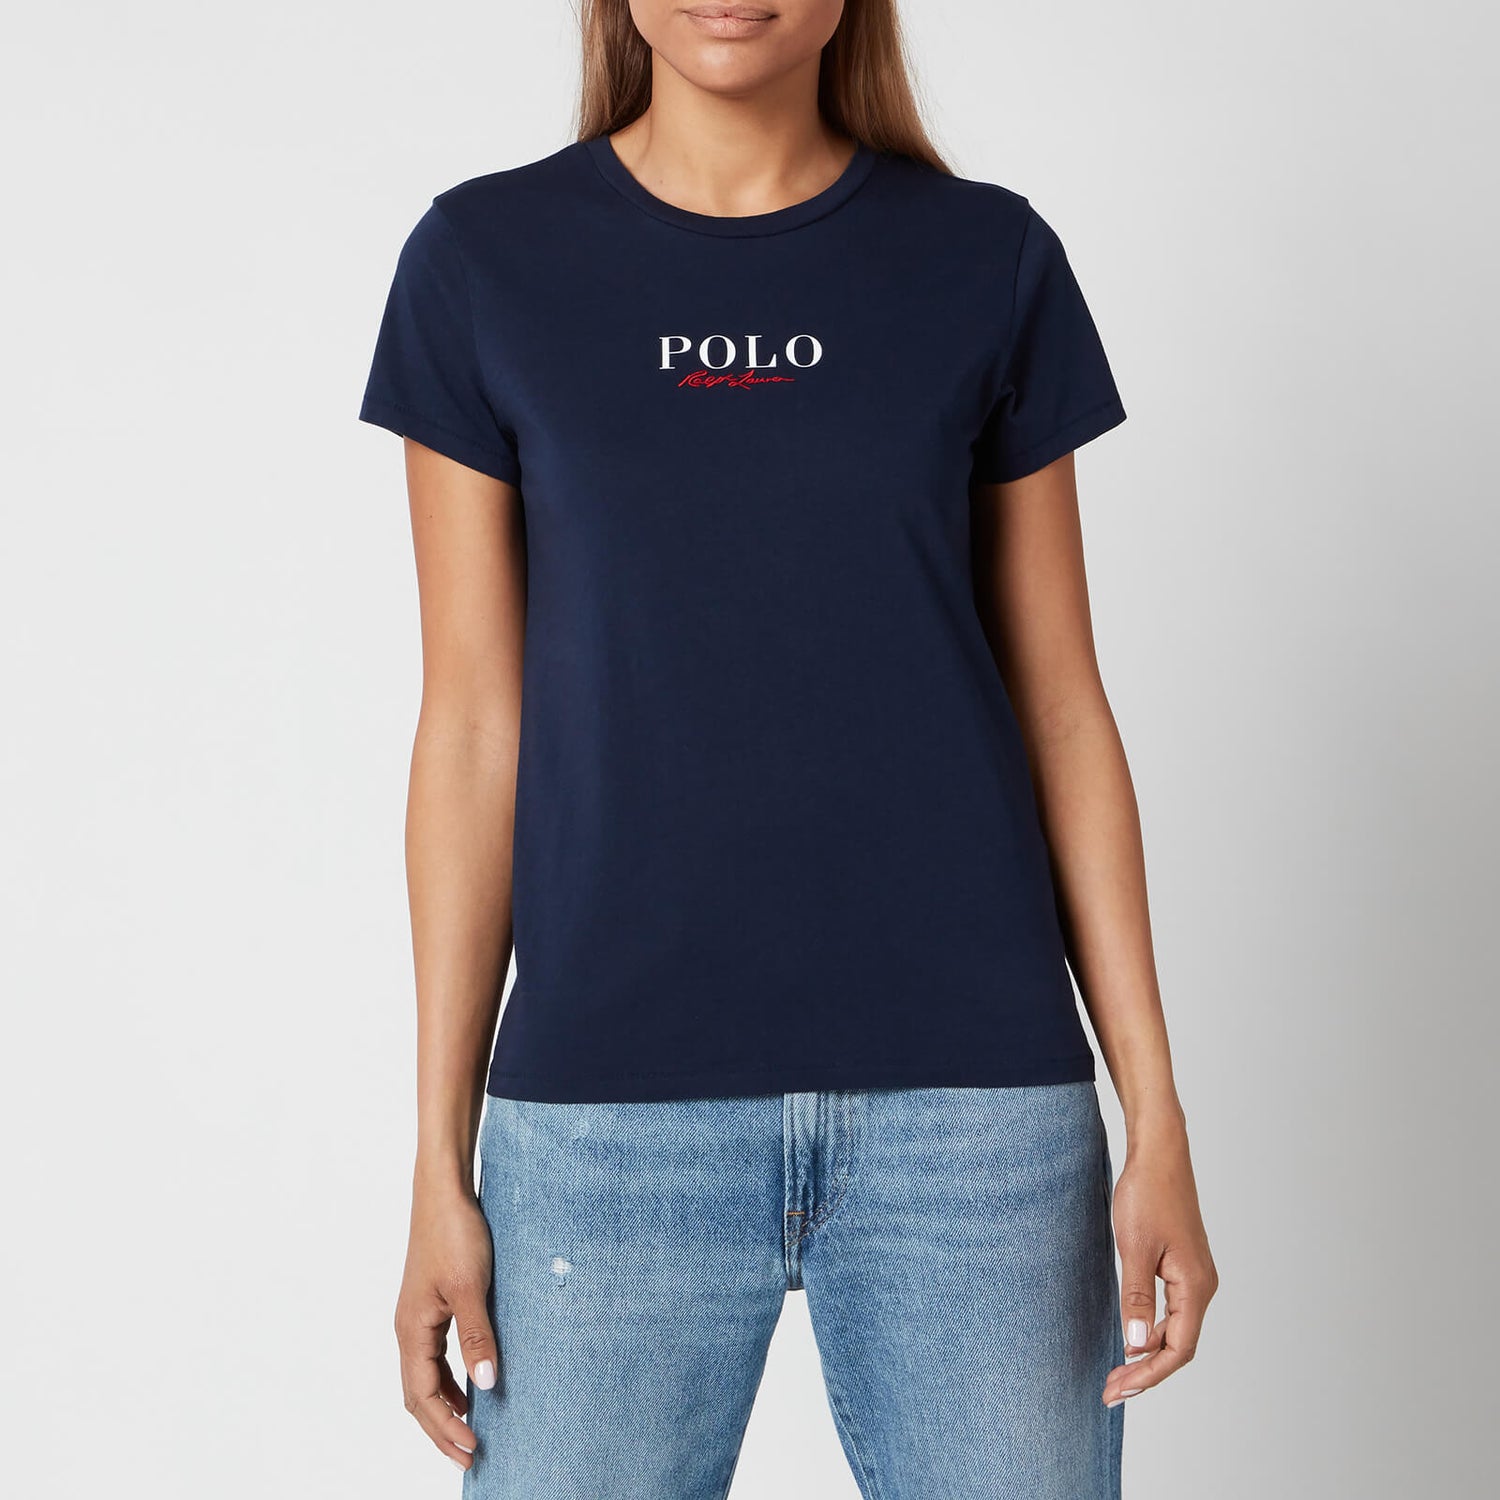 Polo Ralph Lauren Women's Small Logo Polo T-Shirt - Cruise Navy